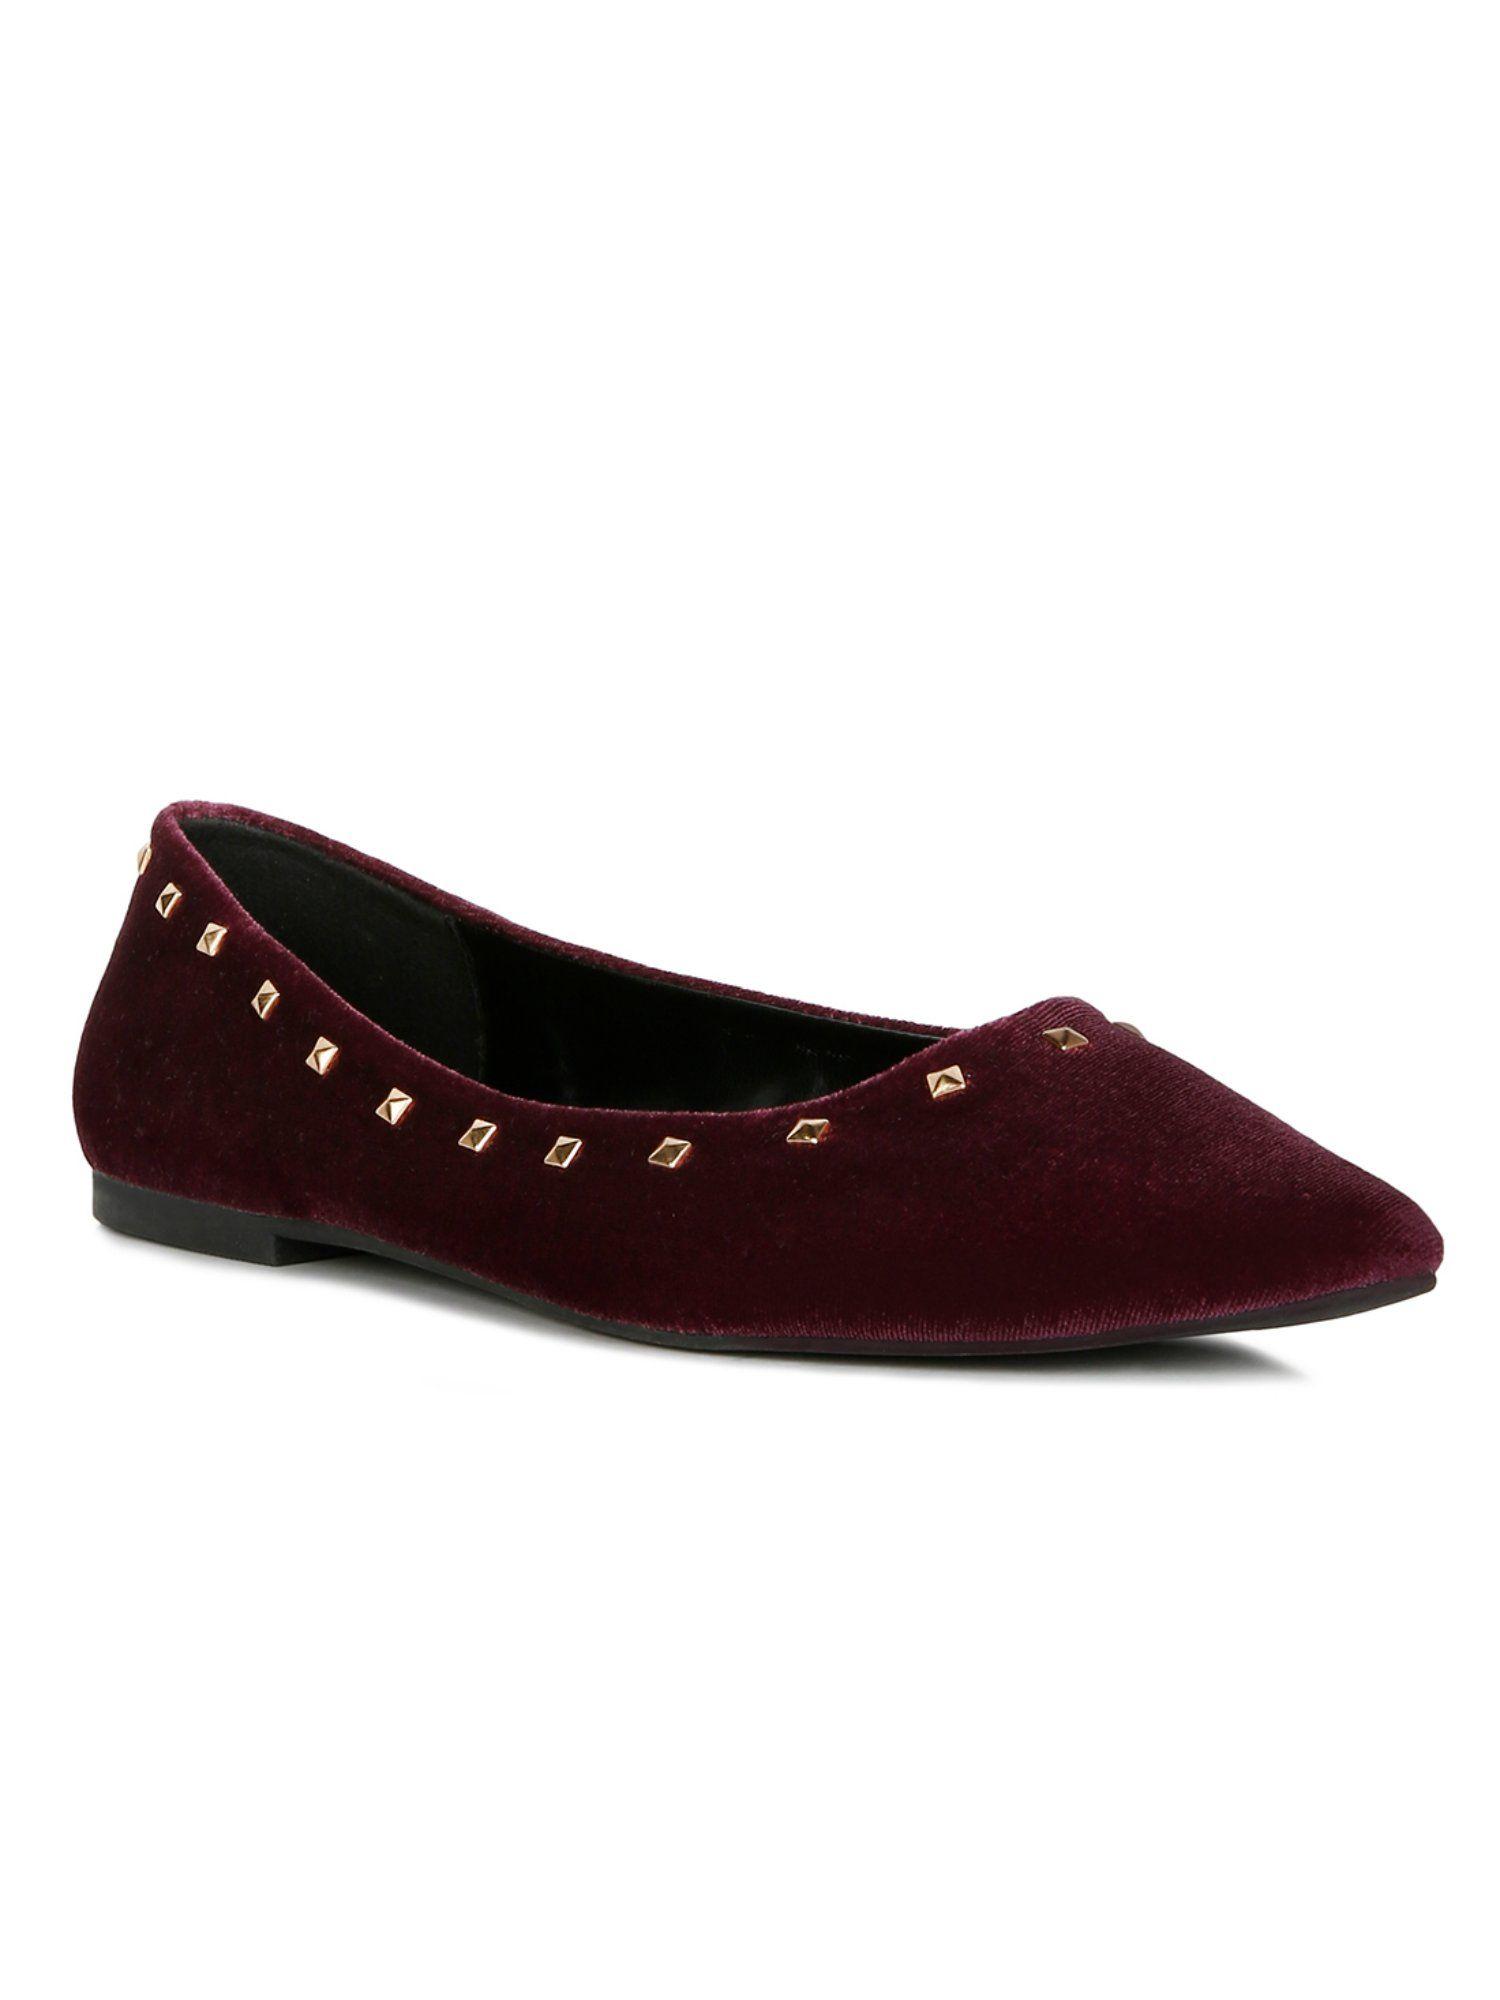 embellished maroon loafers